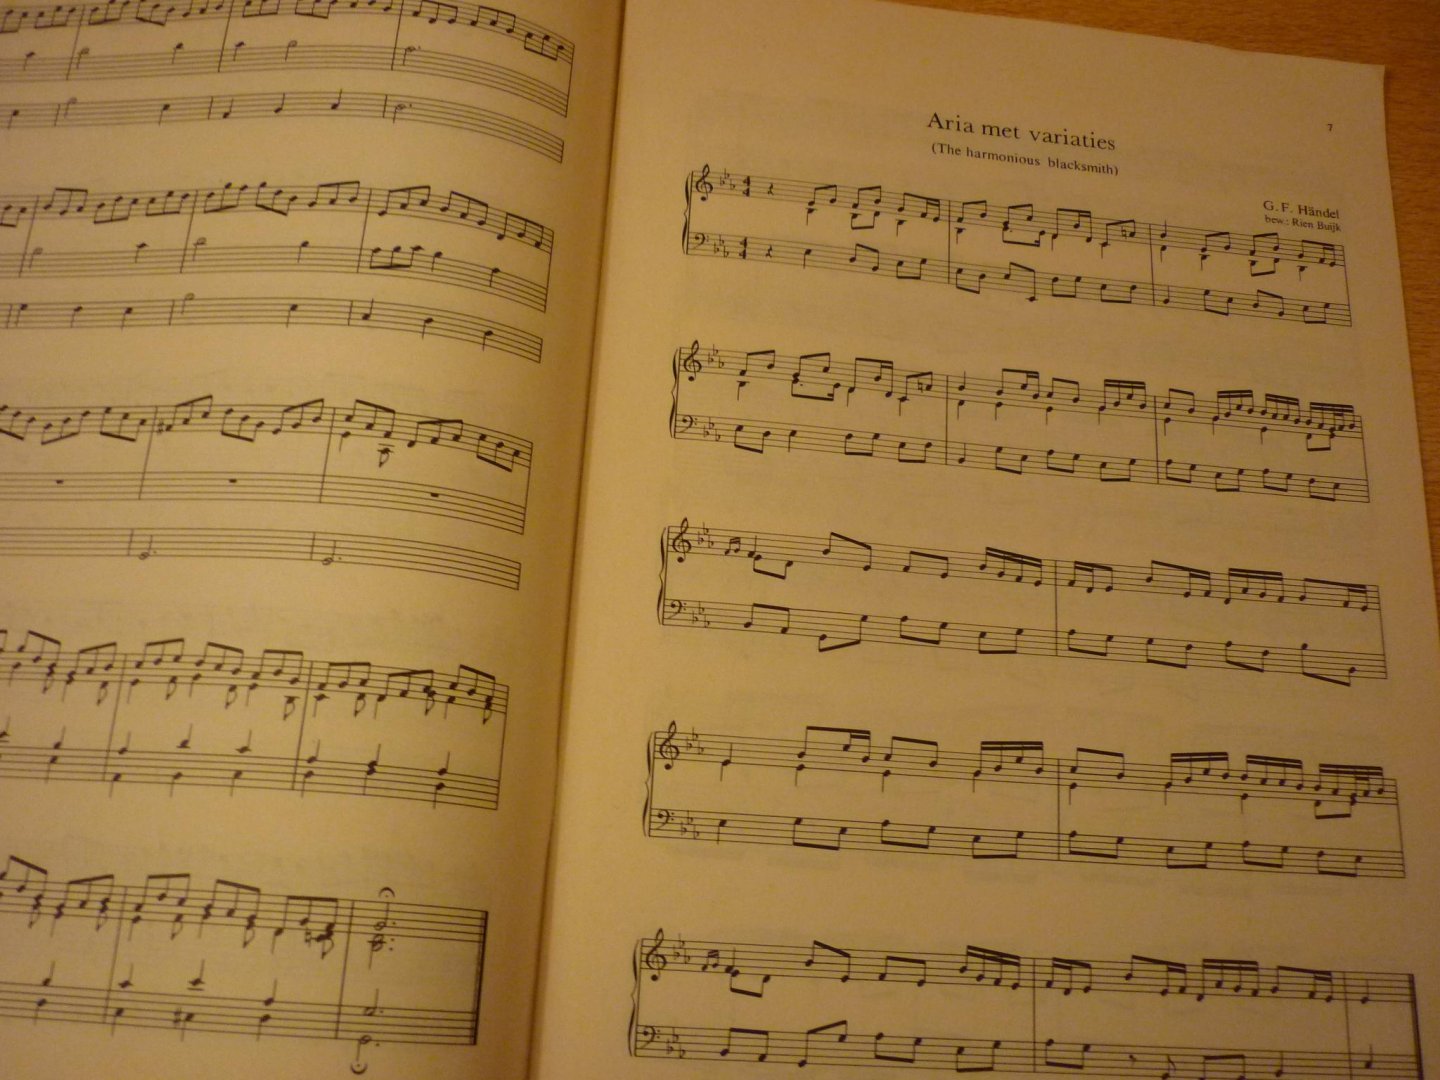 Buyk; Rien - Classical Organ Works - Saint Saens / Handel / Bach